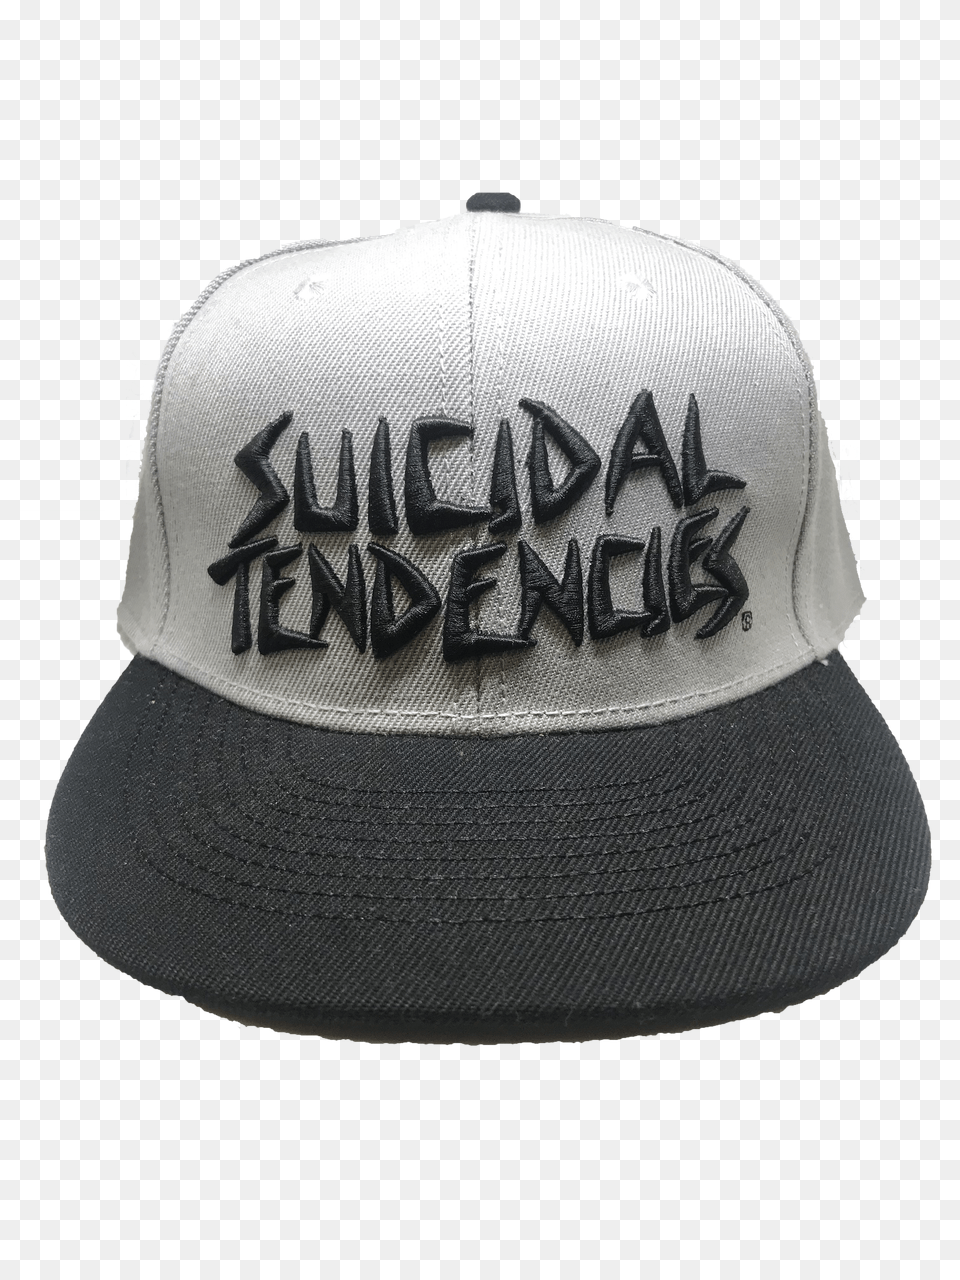 Suicidal Tendencies Embroidered Cap Baseball Cap, Text Png